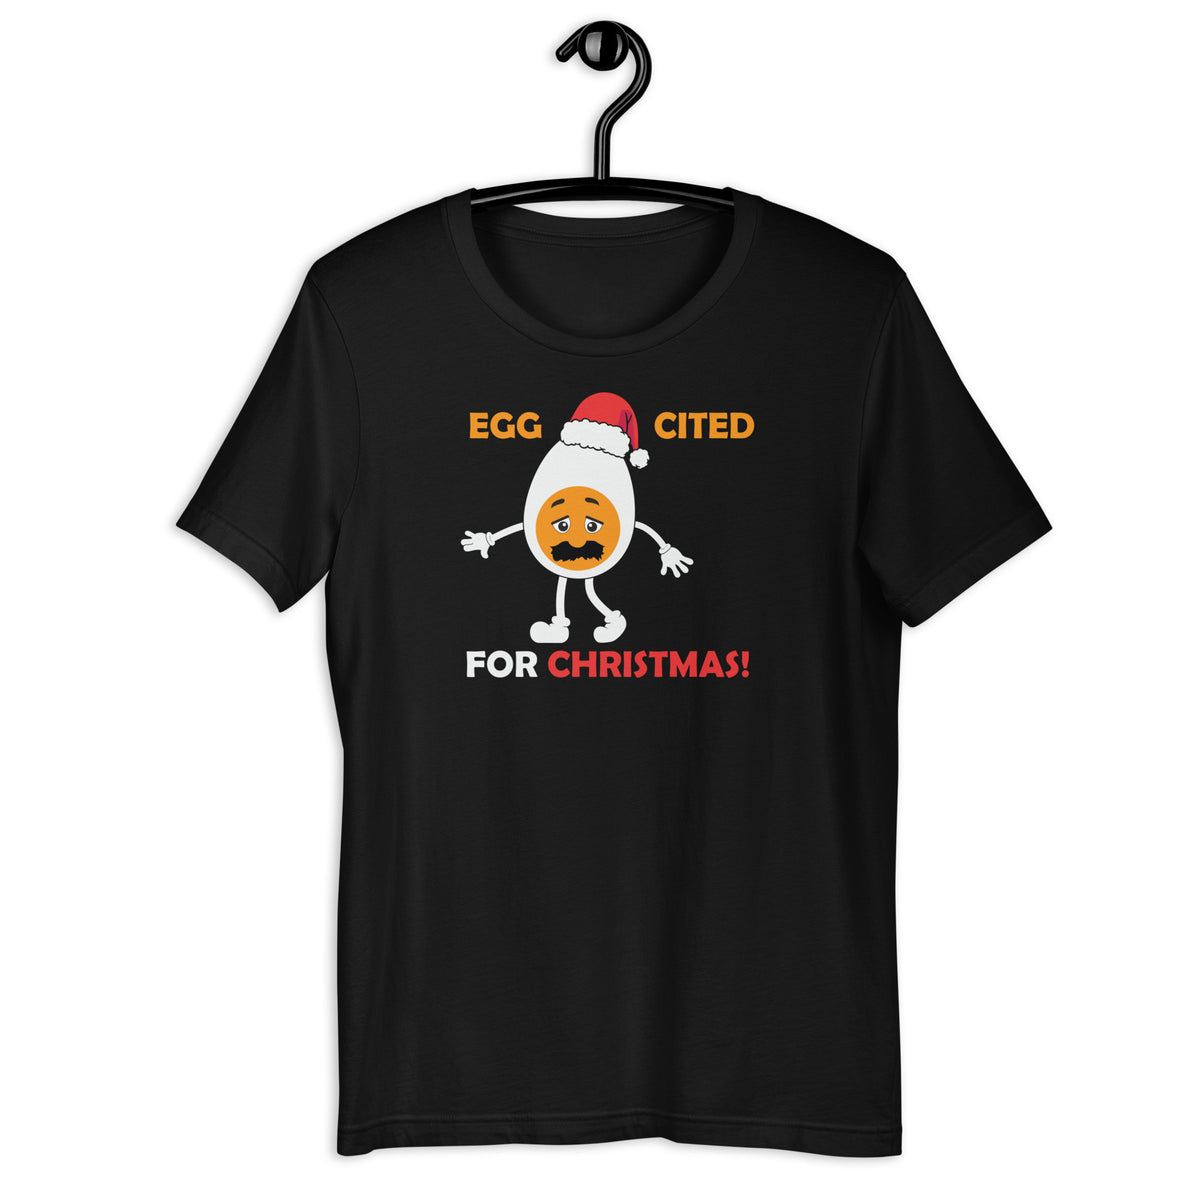 Egg-cited For Christmas T-Shirt - SHOPNOO